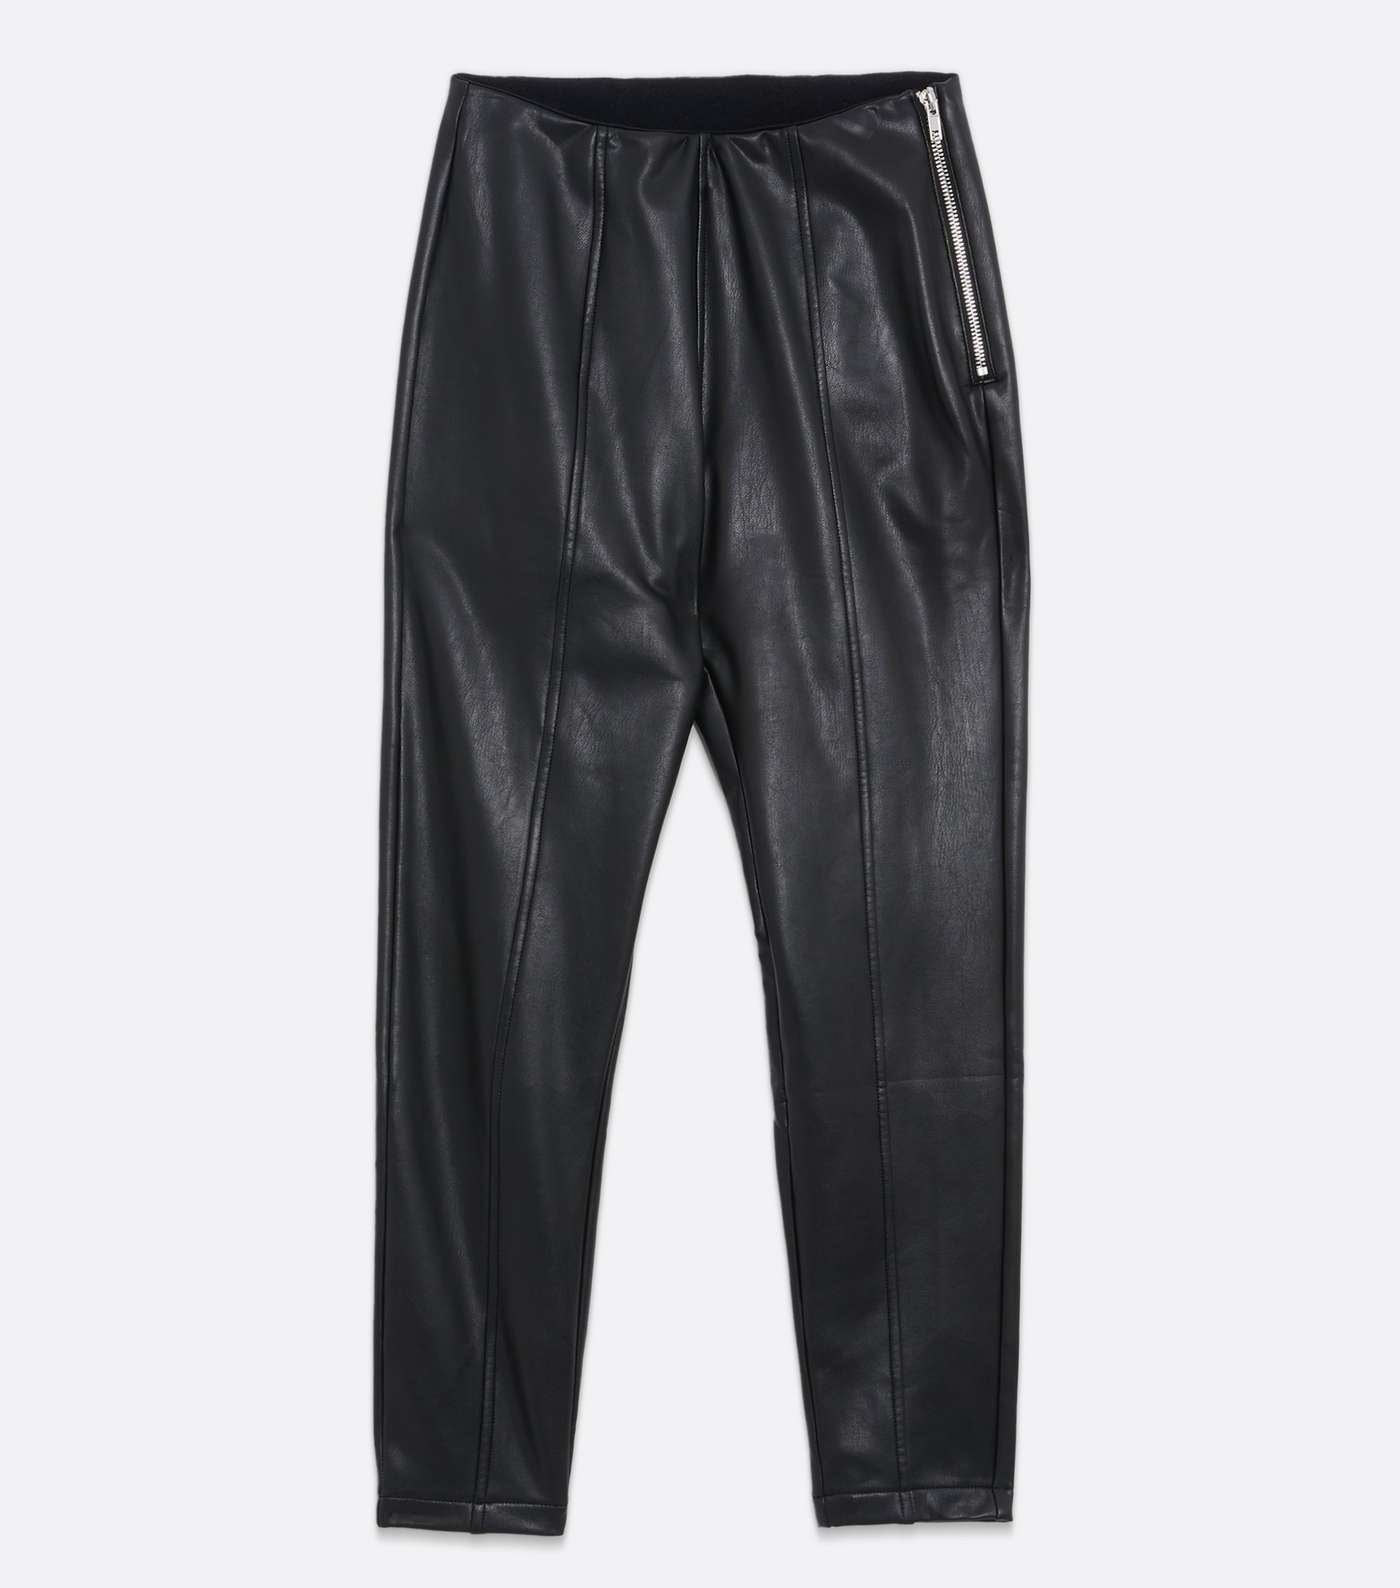 Petite Black Leather-Look High Waist Zip Short Leggings Image 5